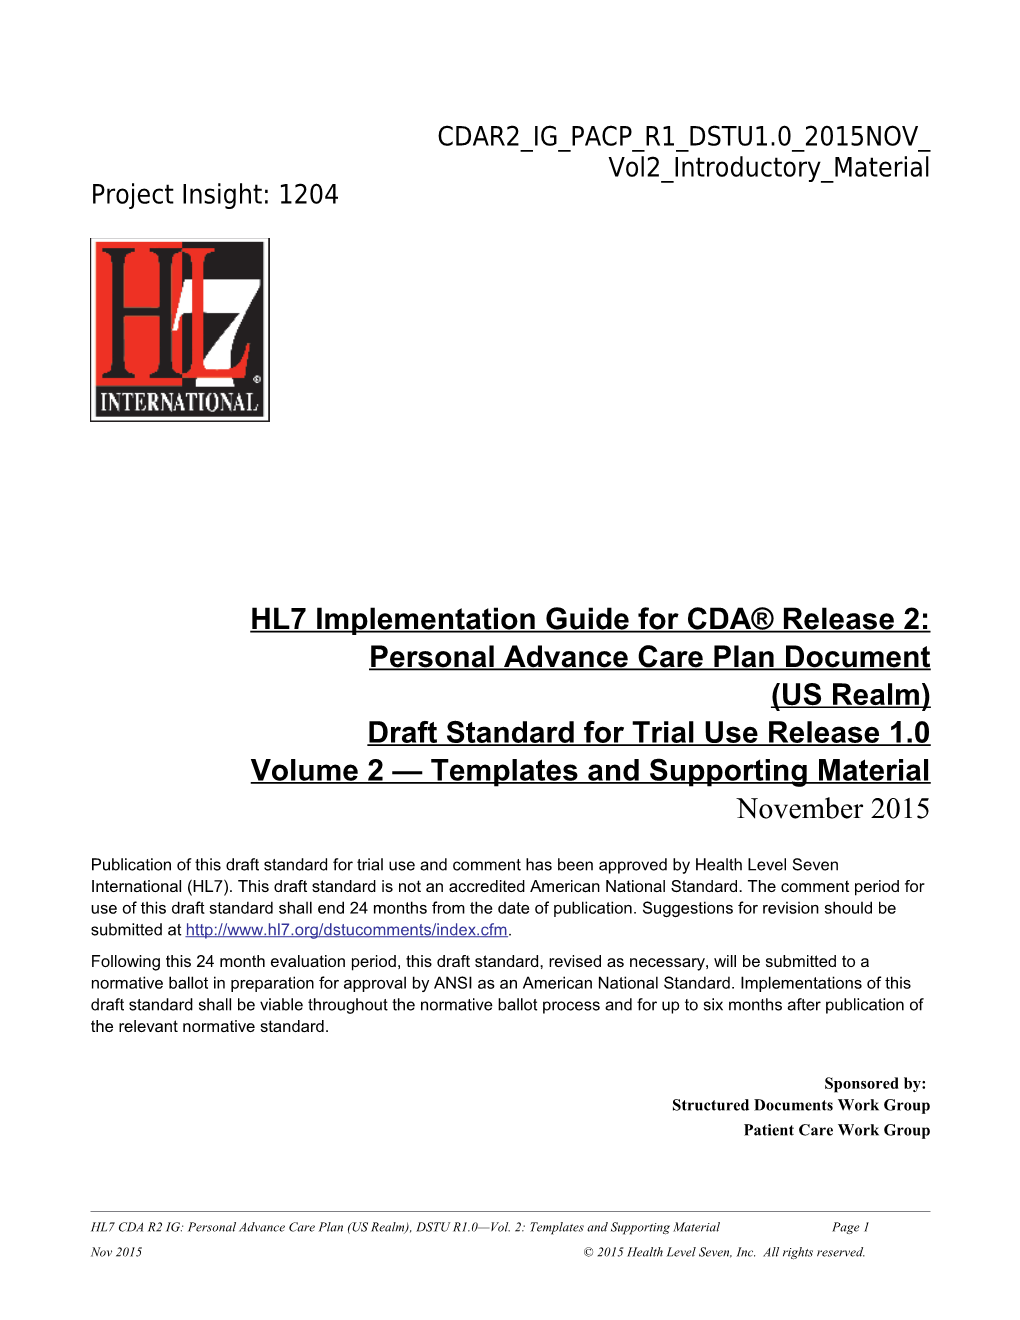 HL7 Implementation Guide for CDA Release 2